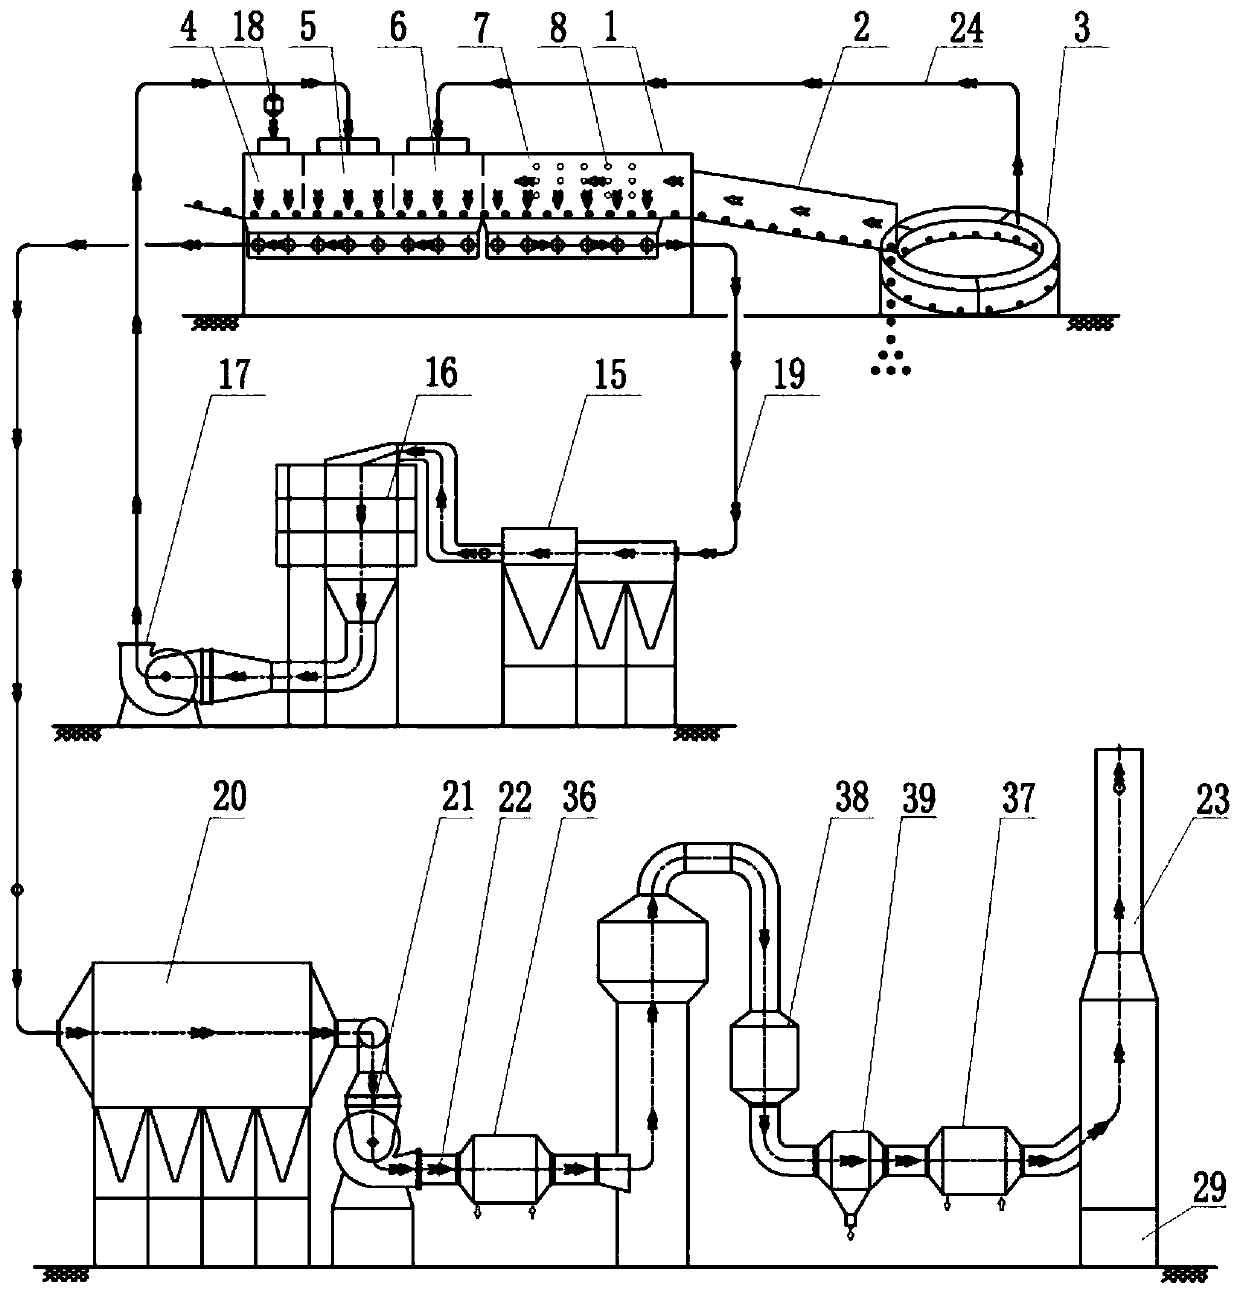 Grate-rotary kiln pellet flue gas ultra-low emission system